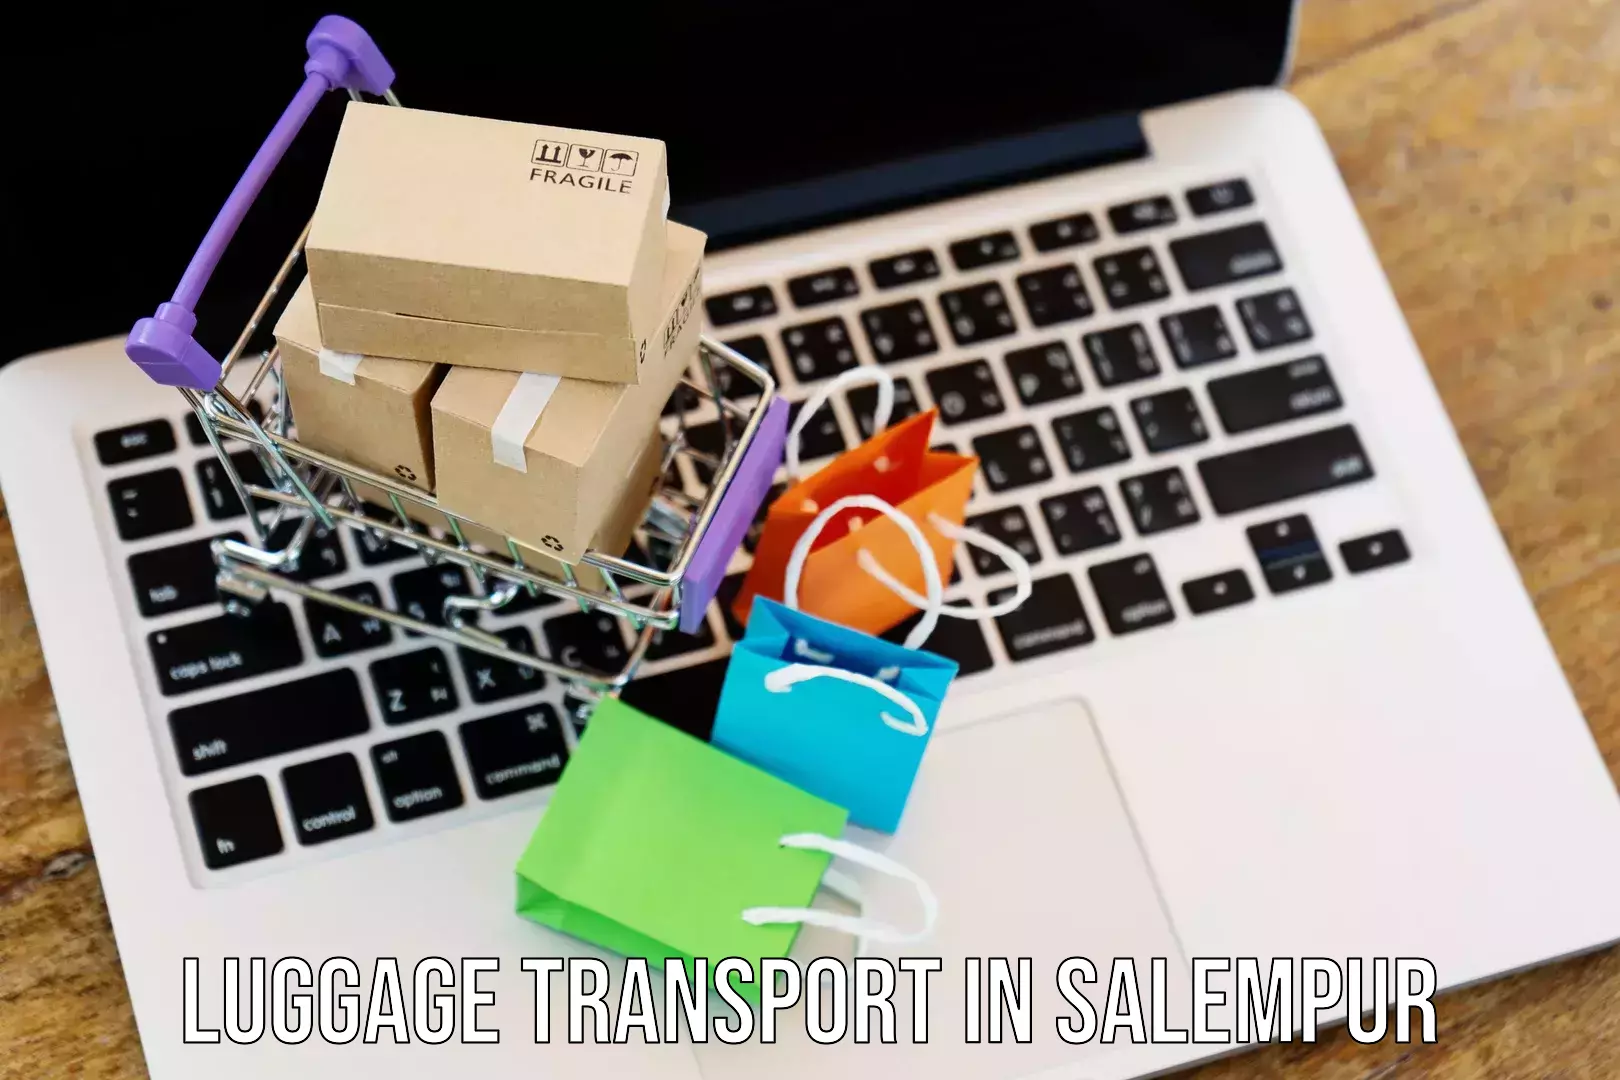 Urgent luggage shipment in Salempur